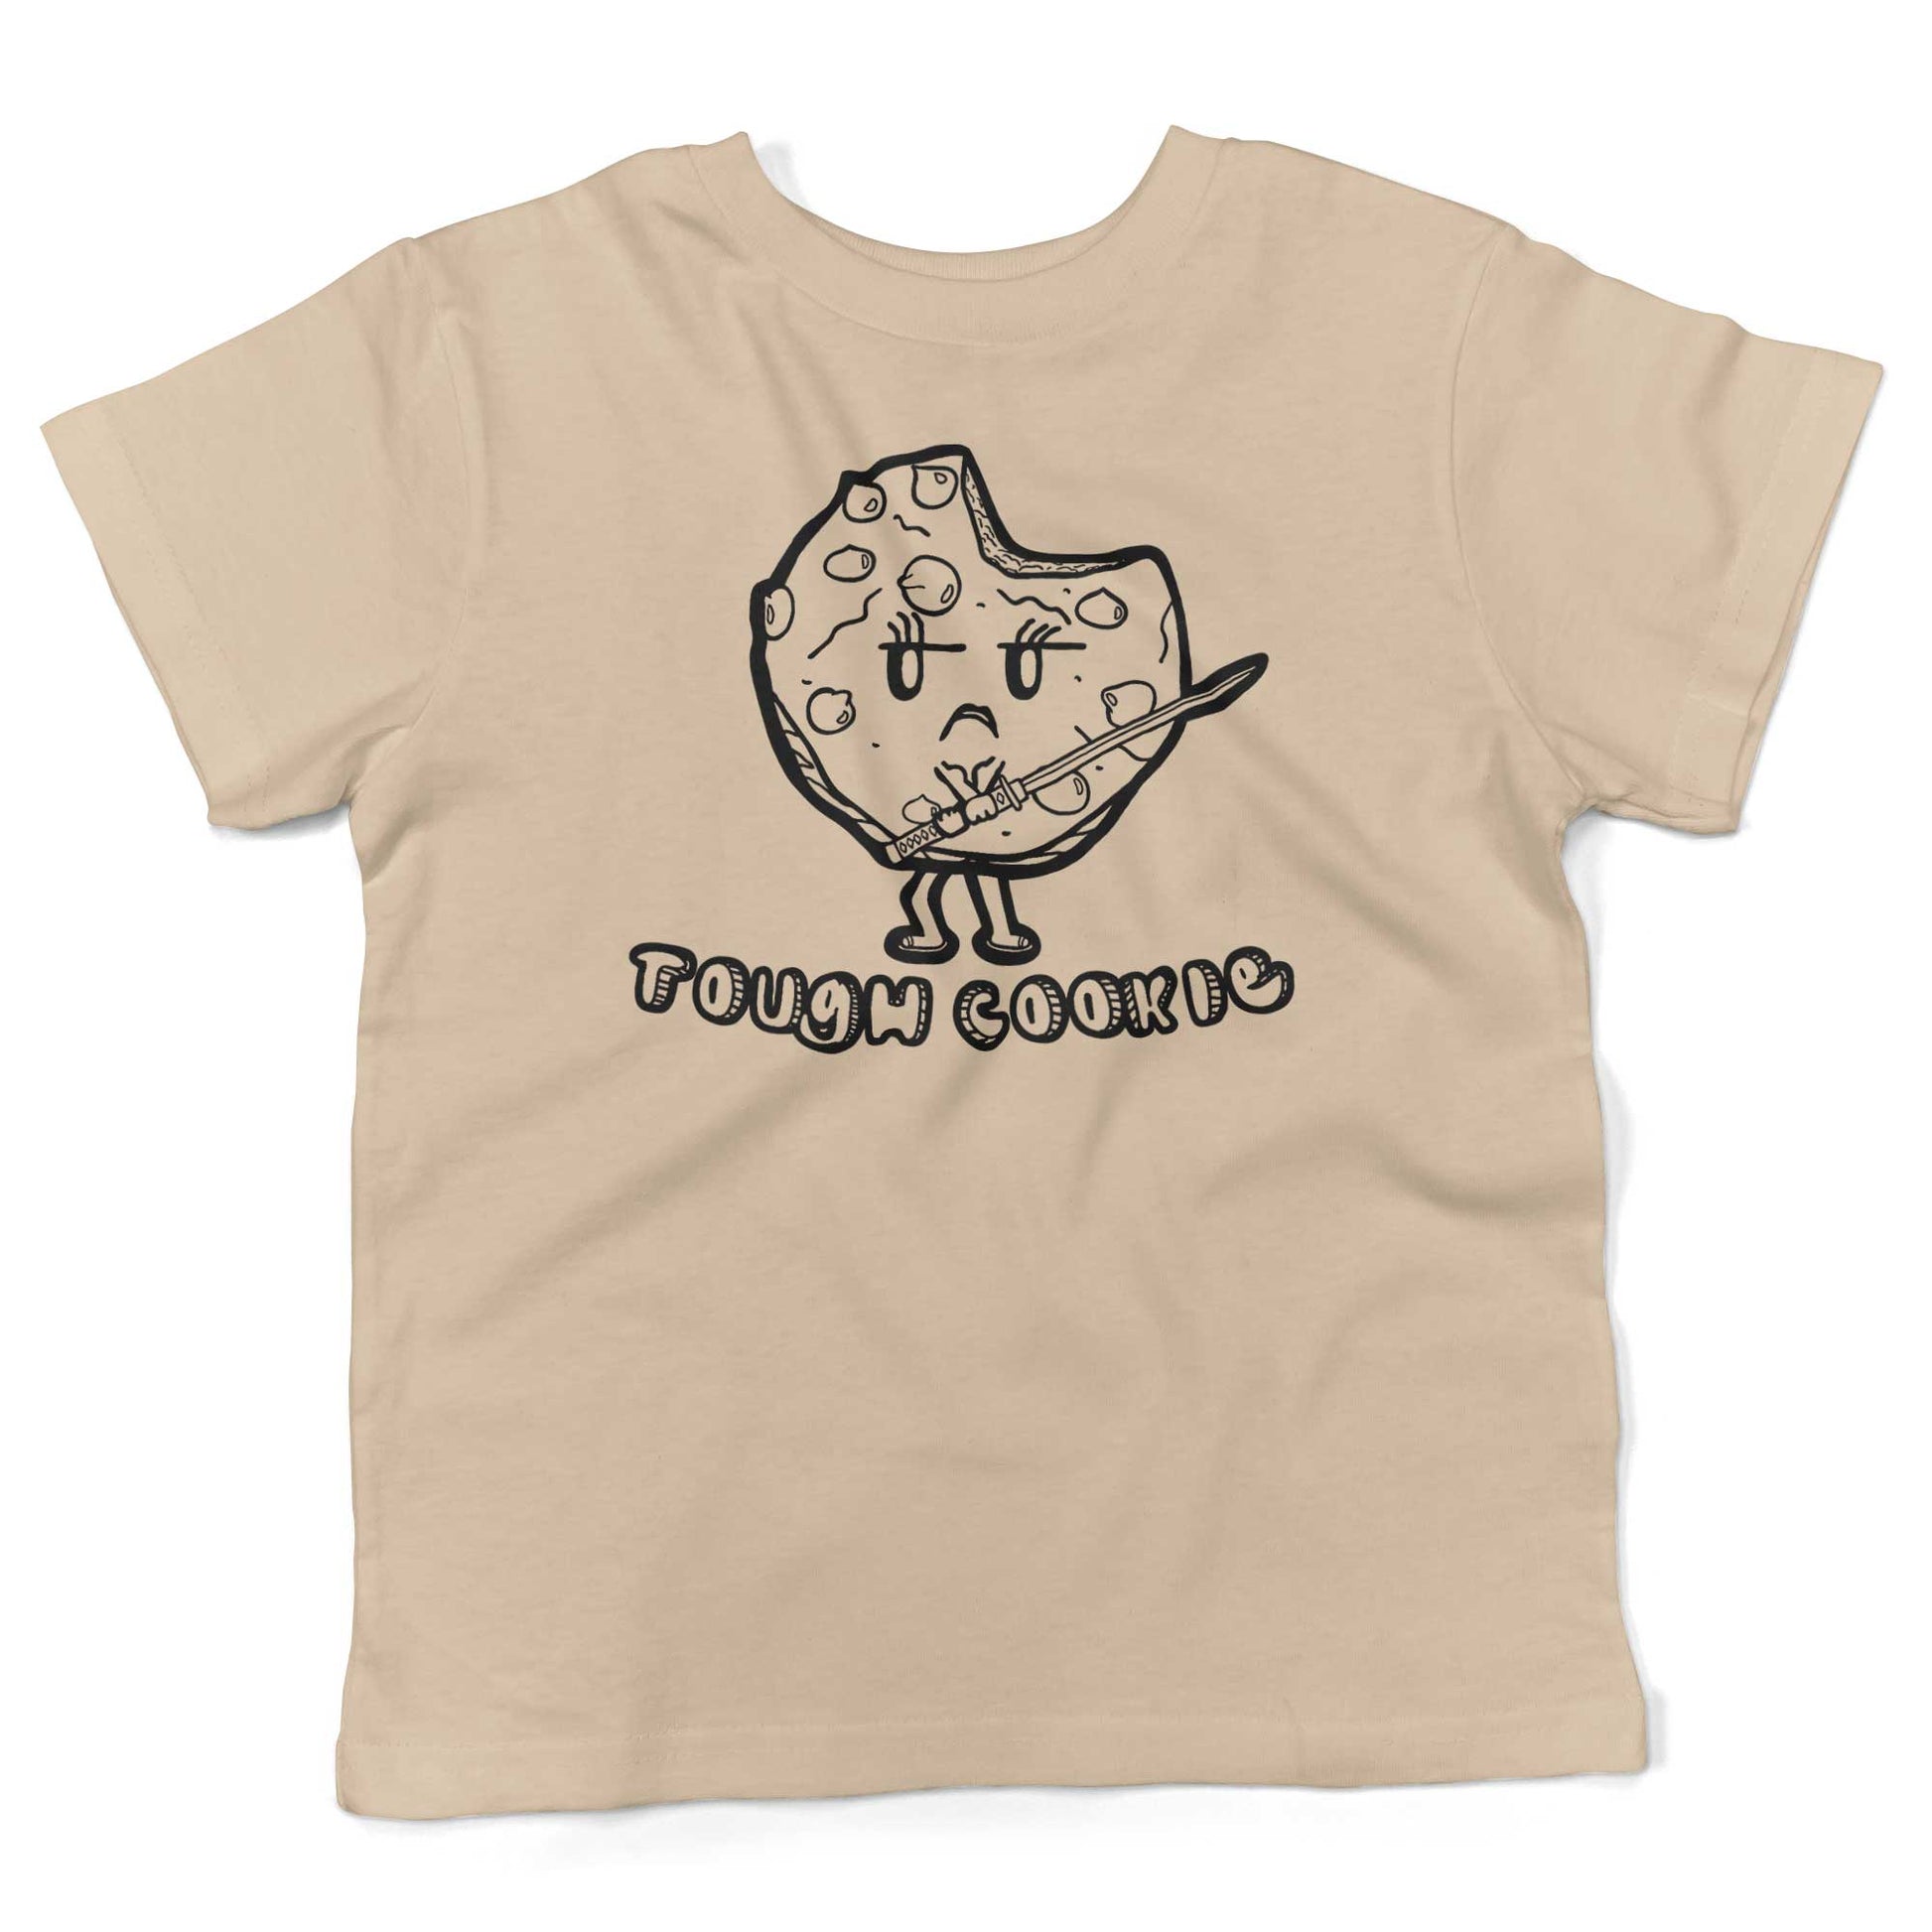 Tough Cookie Toddler Shirt-Organic Natural-2T